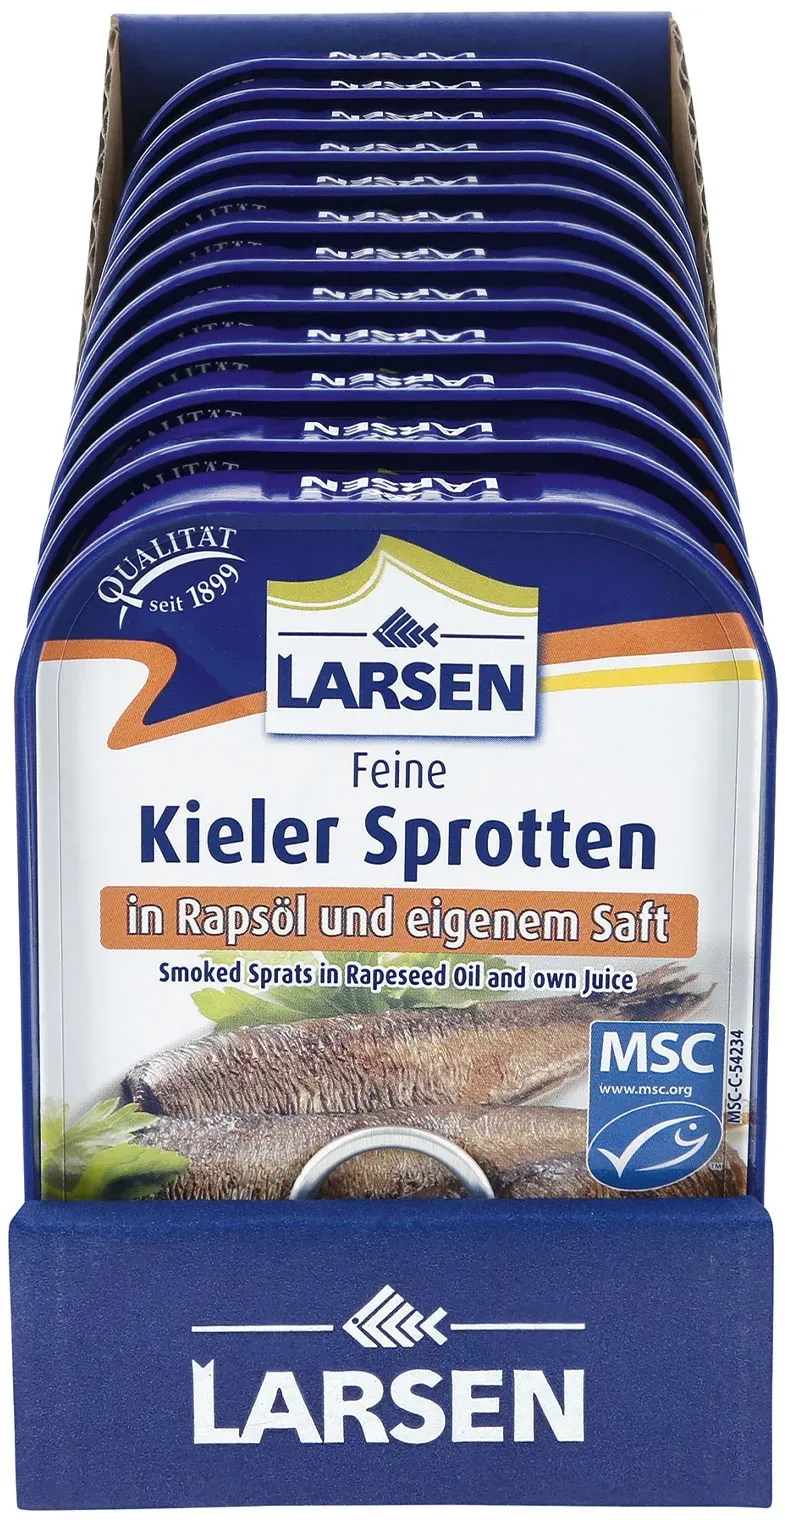 Larsen Kieler Sprotten 110 g Abtropfgewicht, 12er Pack